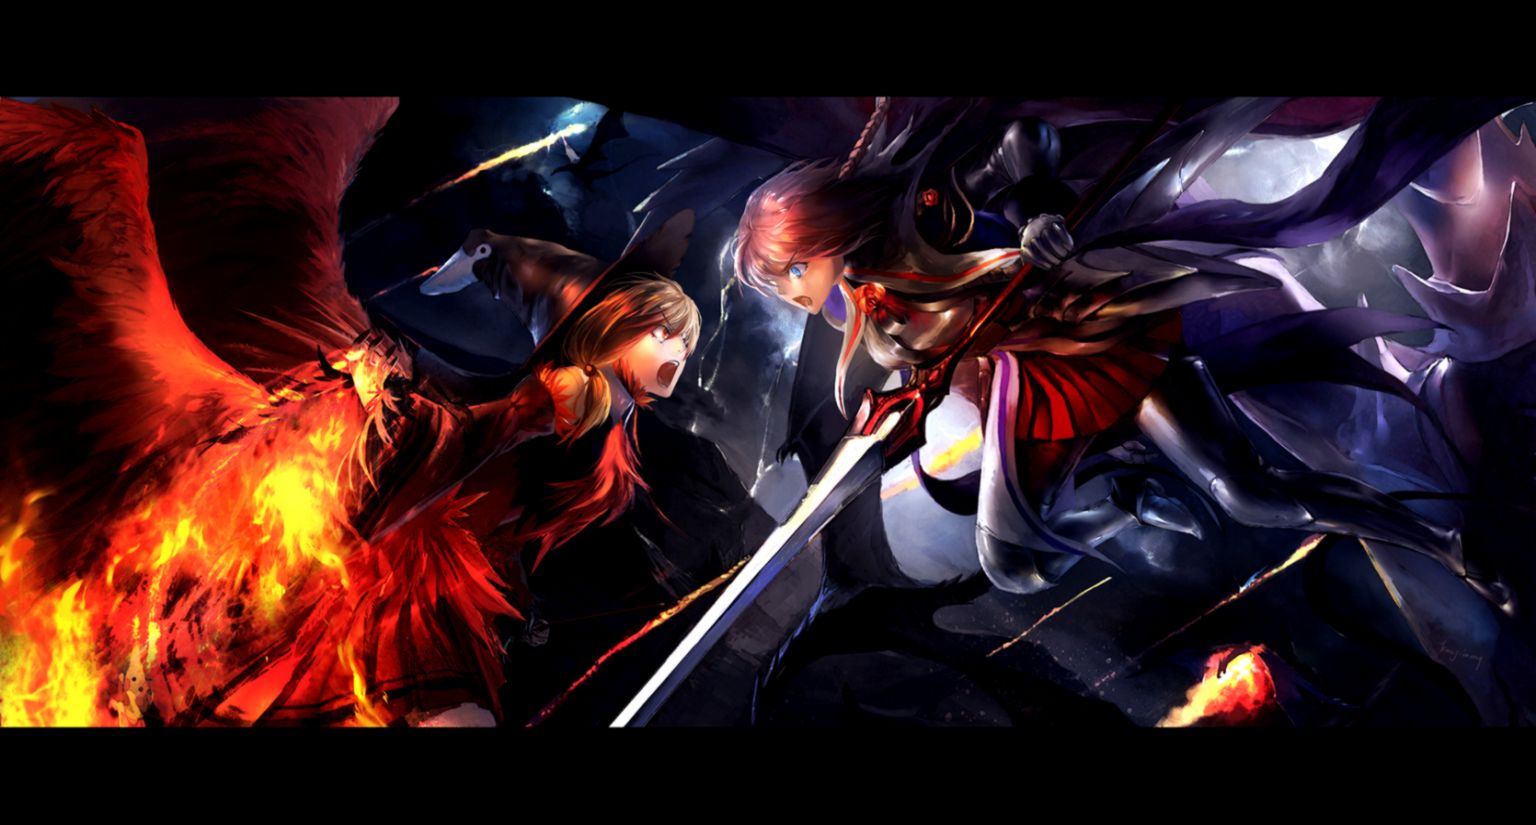 epic anime wallpaper,cg artwork,demon,fictional character,darkness,anime